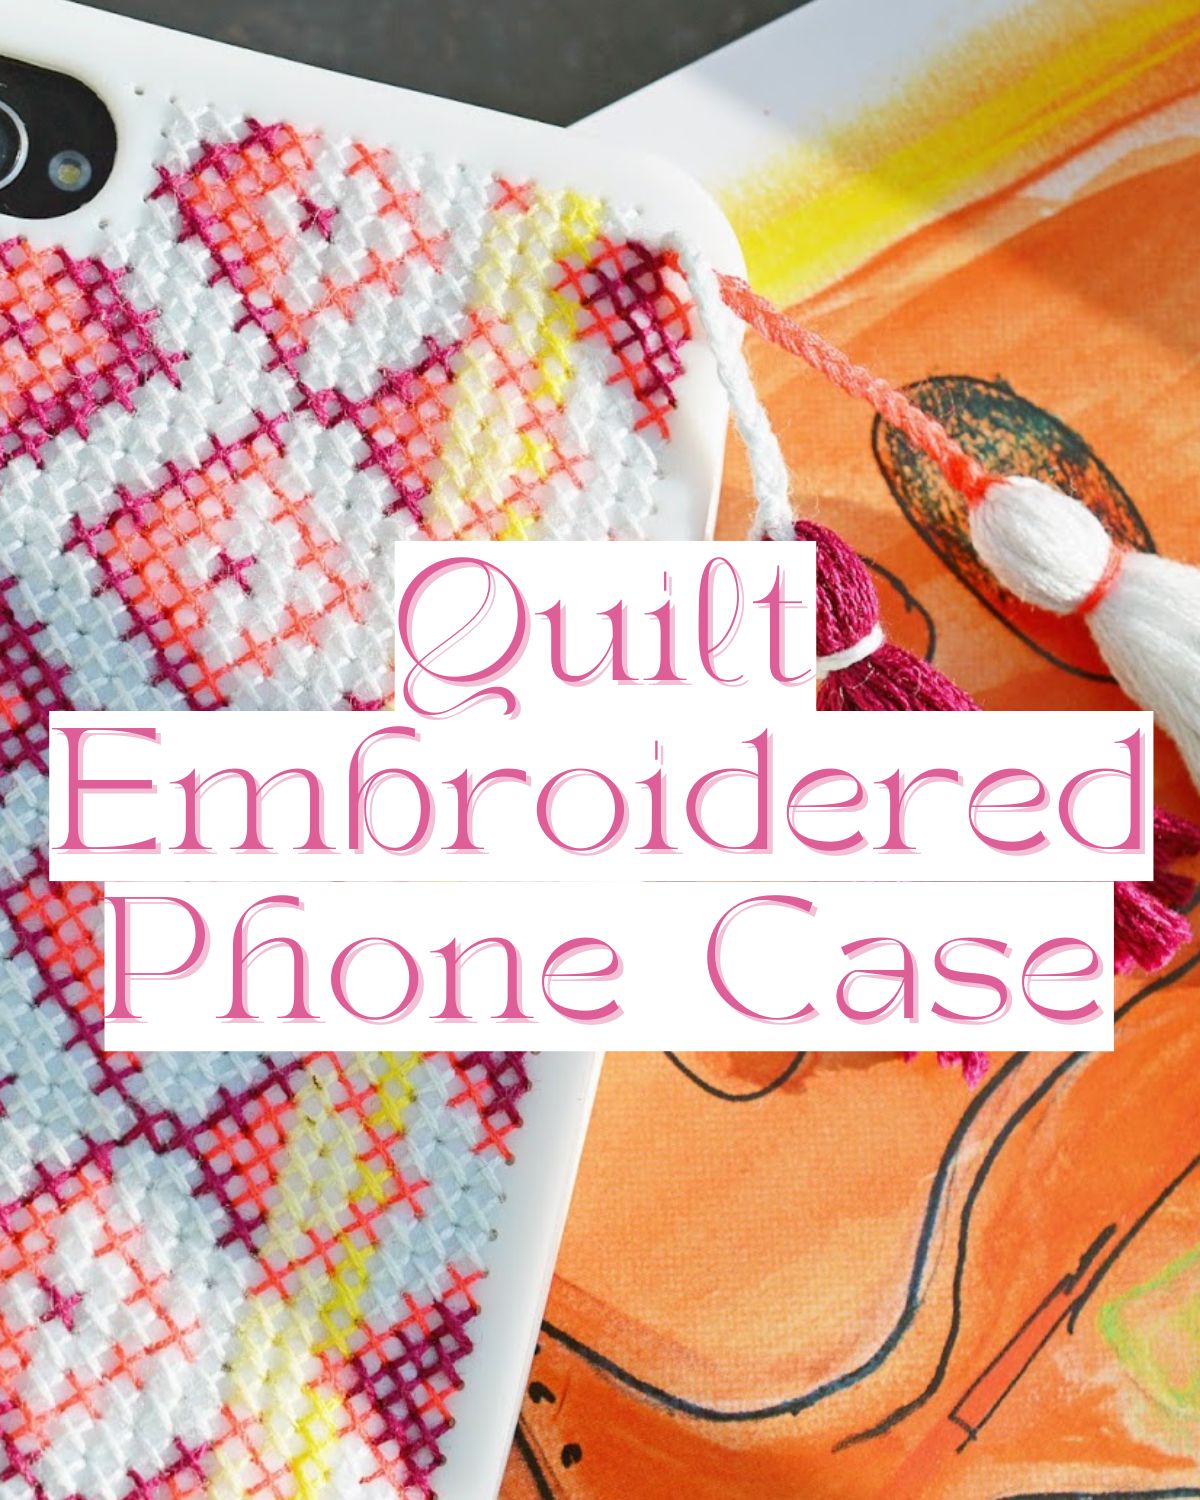 A cute orange and pink stitched phone case